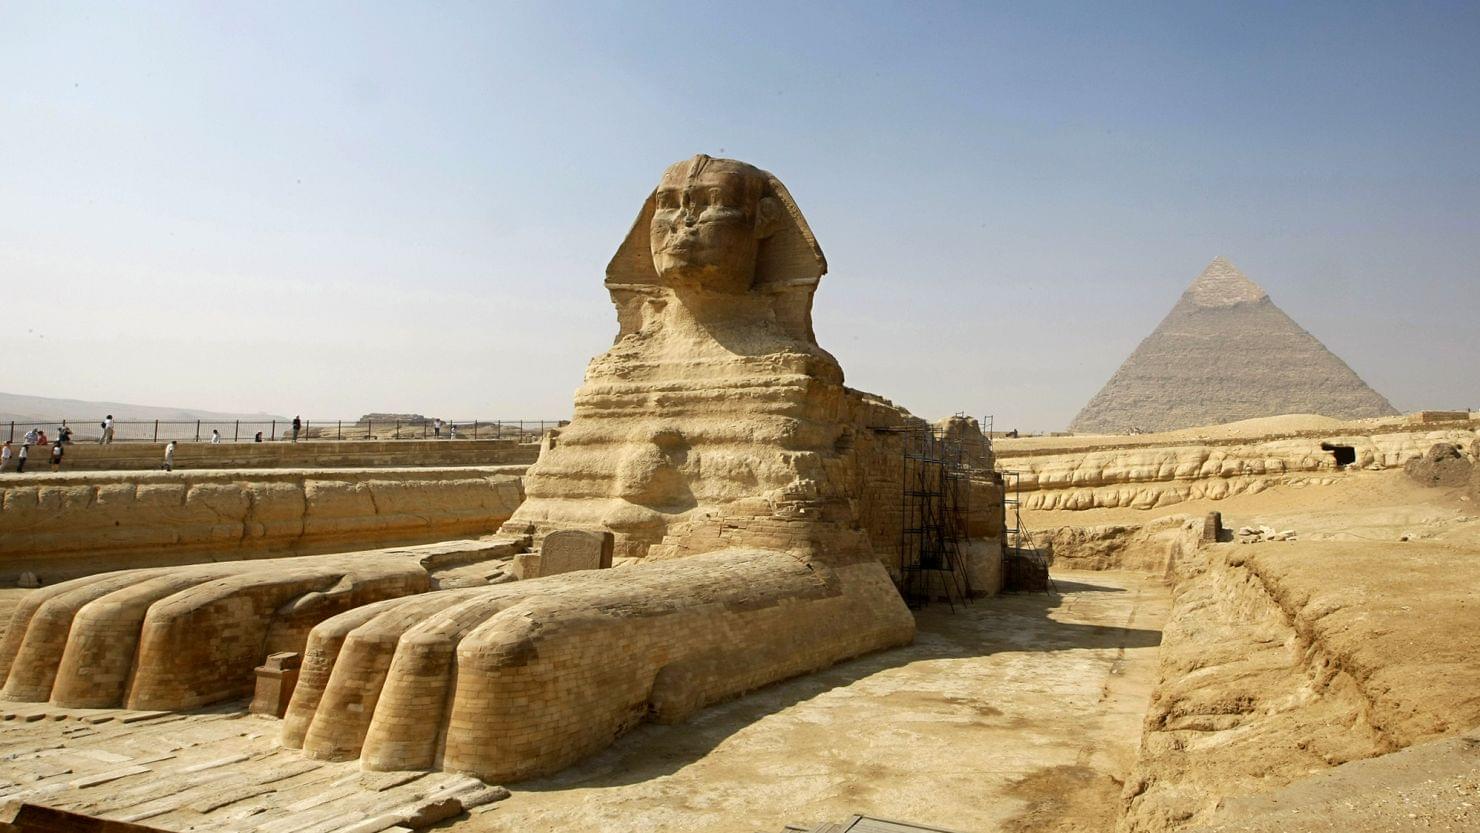 Sphinx Overview